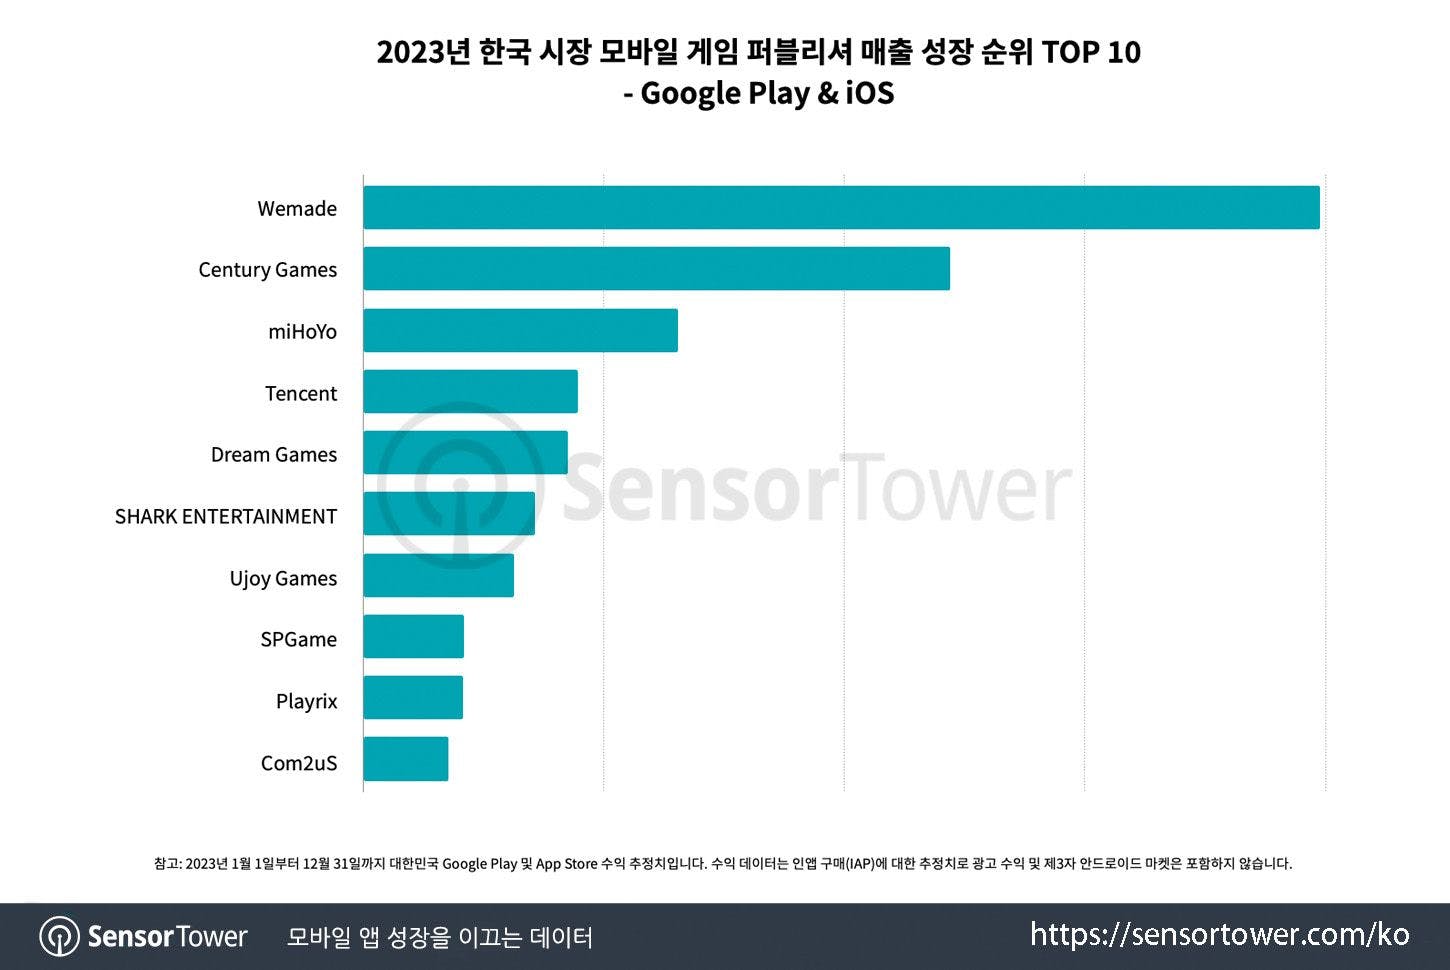 Sensor Tower: Mobile Publisher Ranking in South Korea in 2023